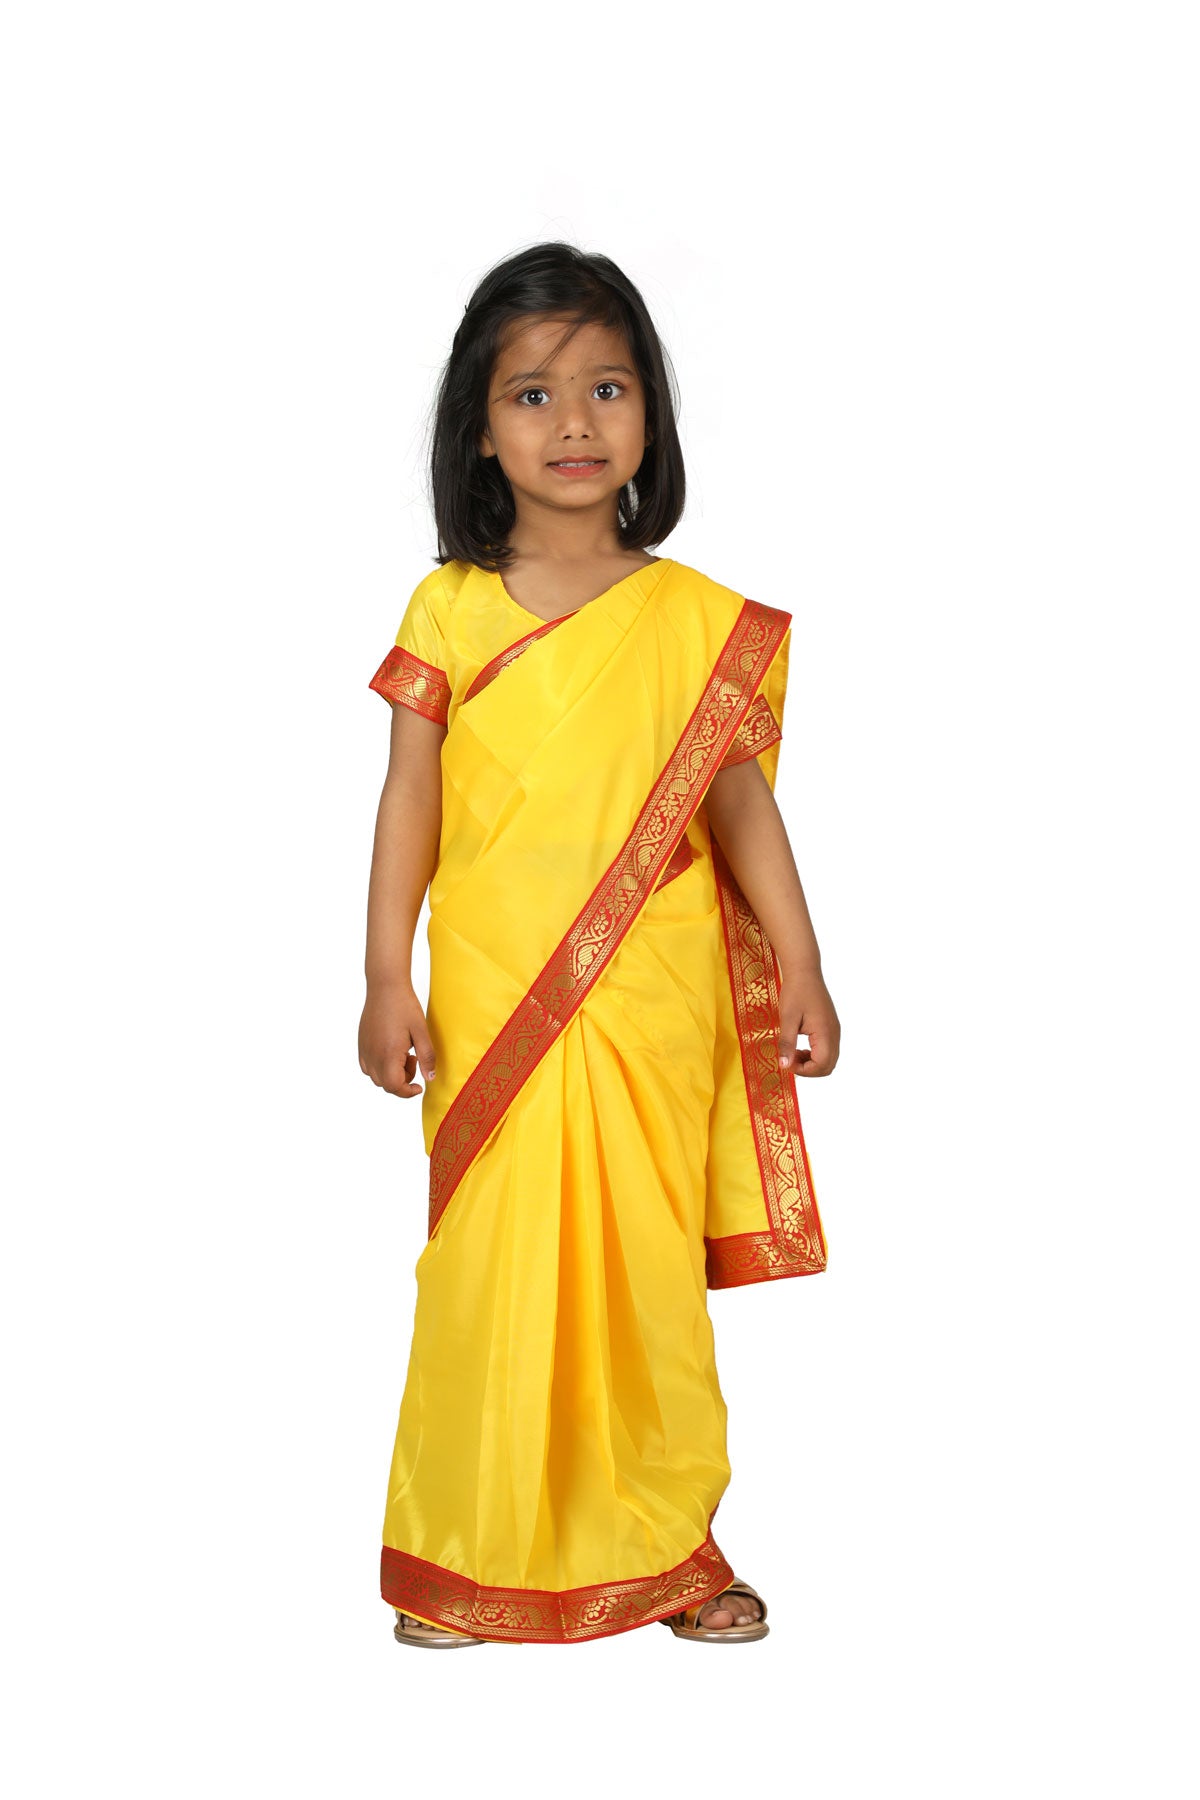 New south Indian traditional pattu pavadai Jecquard Lehenga choli for Kids  girls dress - EVERWILLOW - 4074492